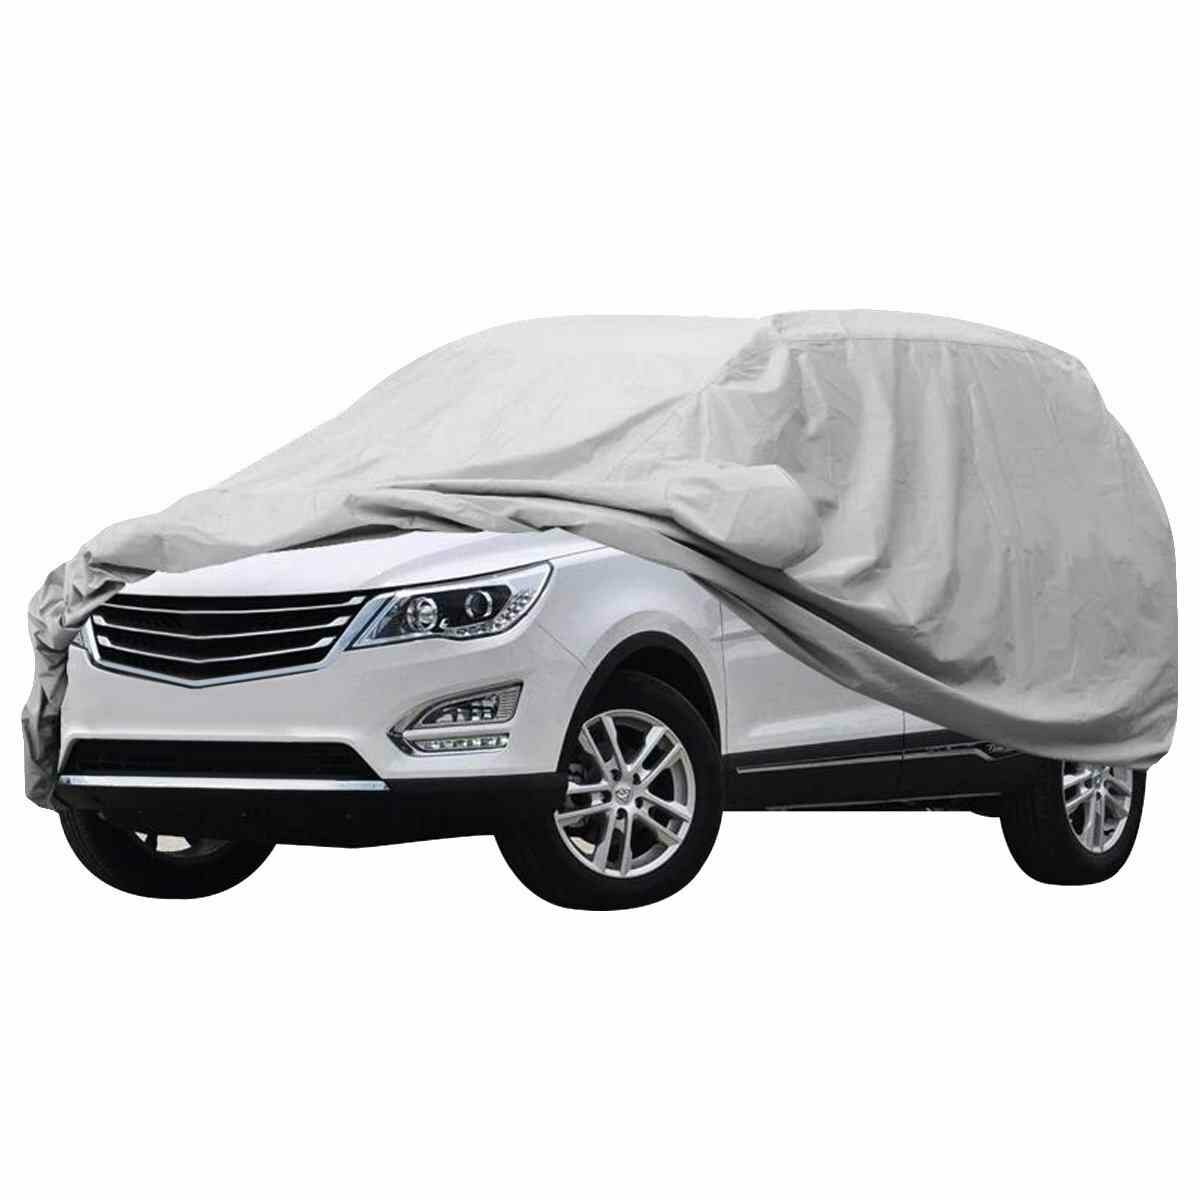 Universal suv car cover waterproof rainproof sunscreen uv protection 4.7mx1.8mx1.85m